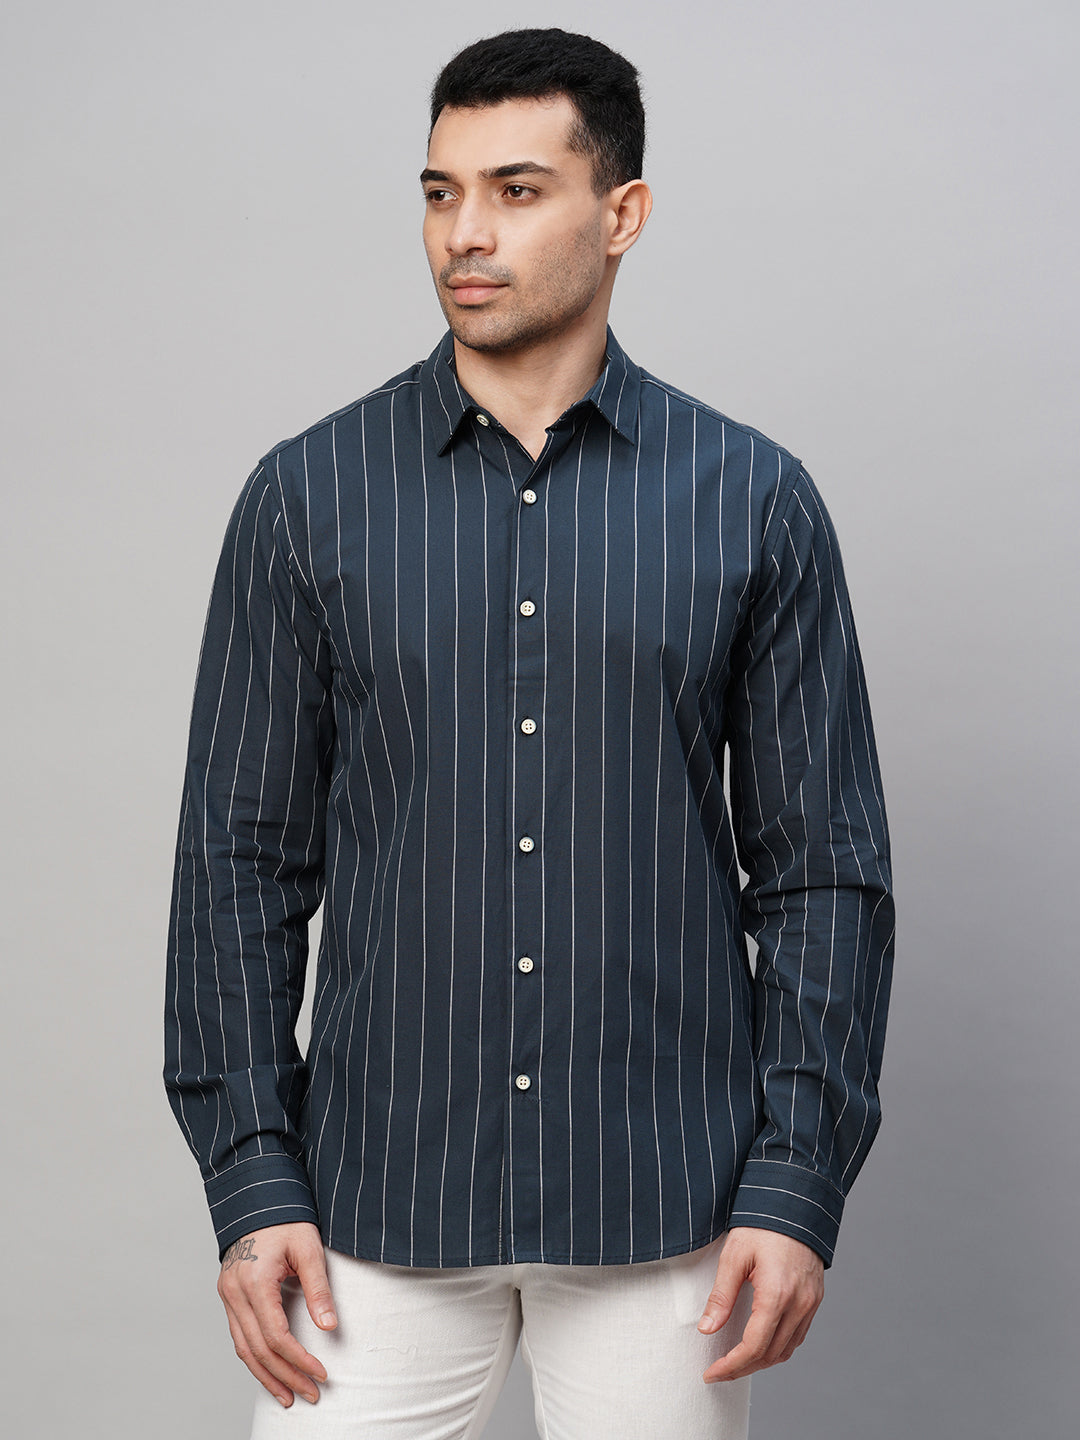 Men's Navy Cotton Slim Fit Striped Shirt